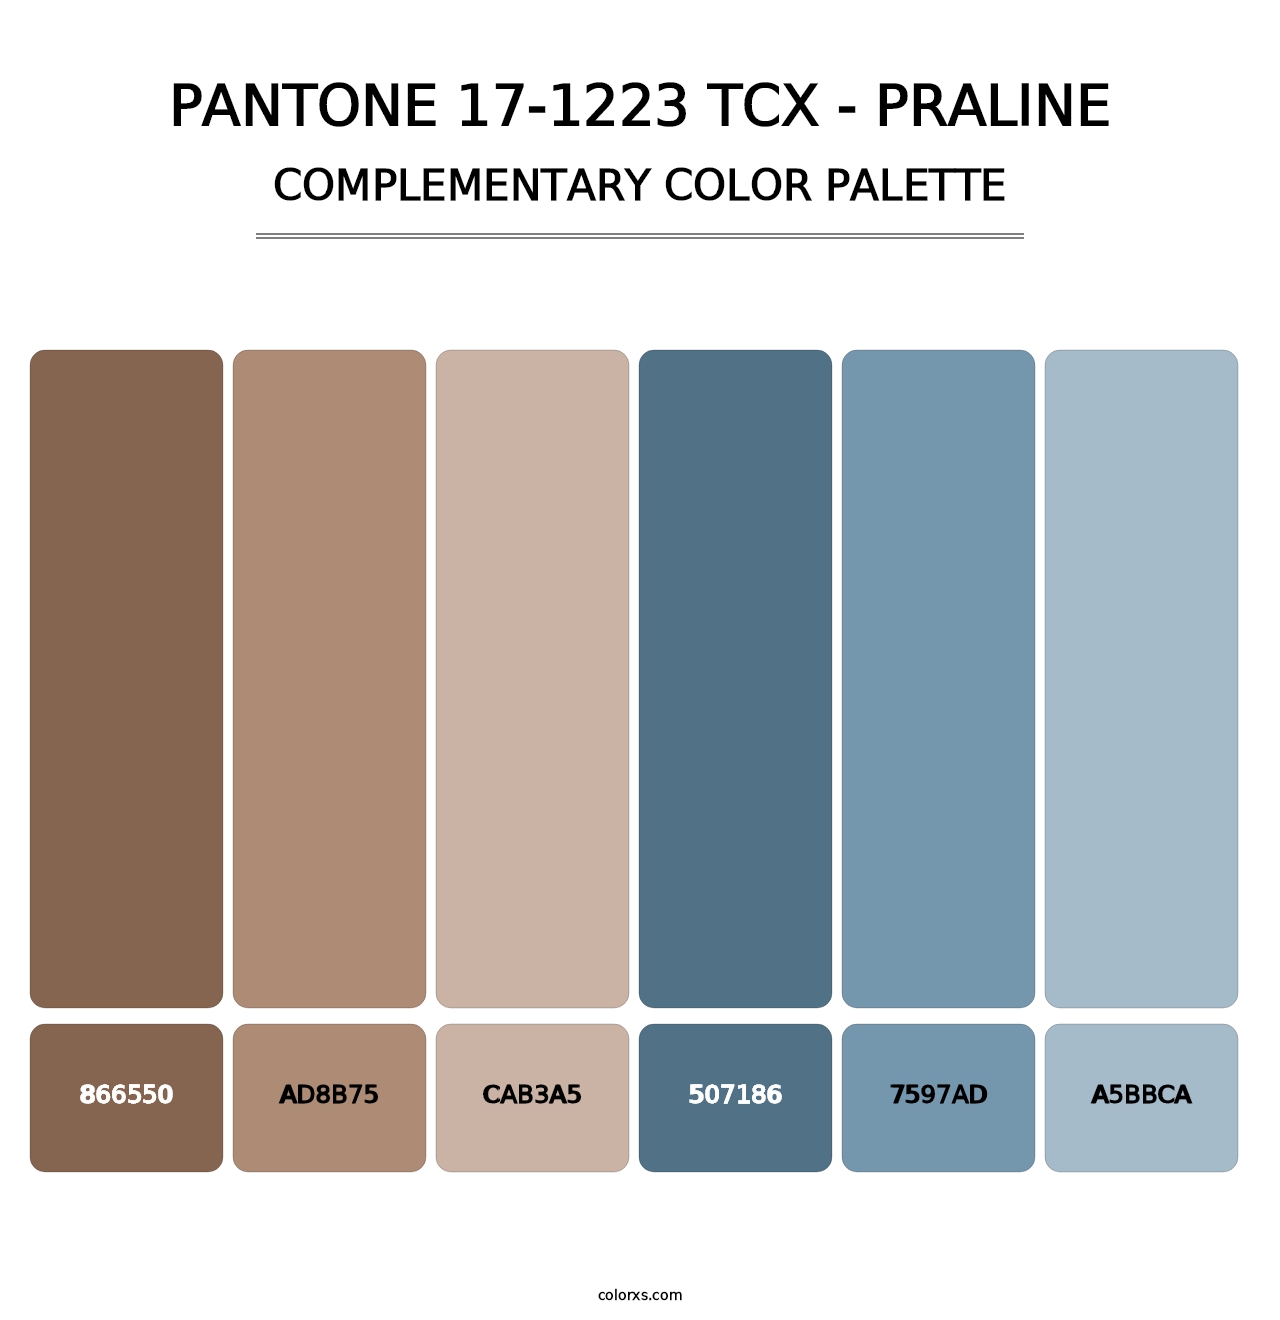 PANTONE 17-1223 TCX - Praline - Complementary Color Palette